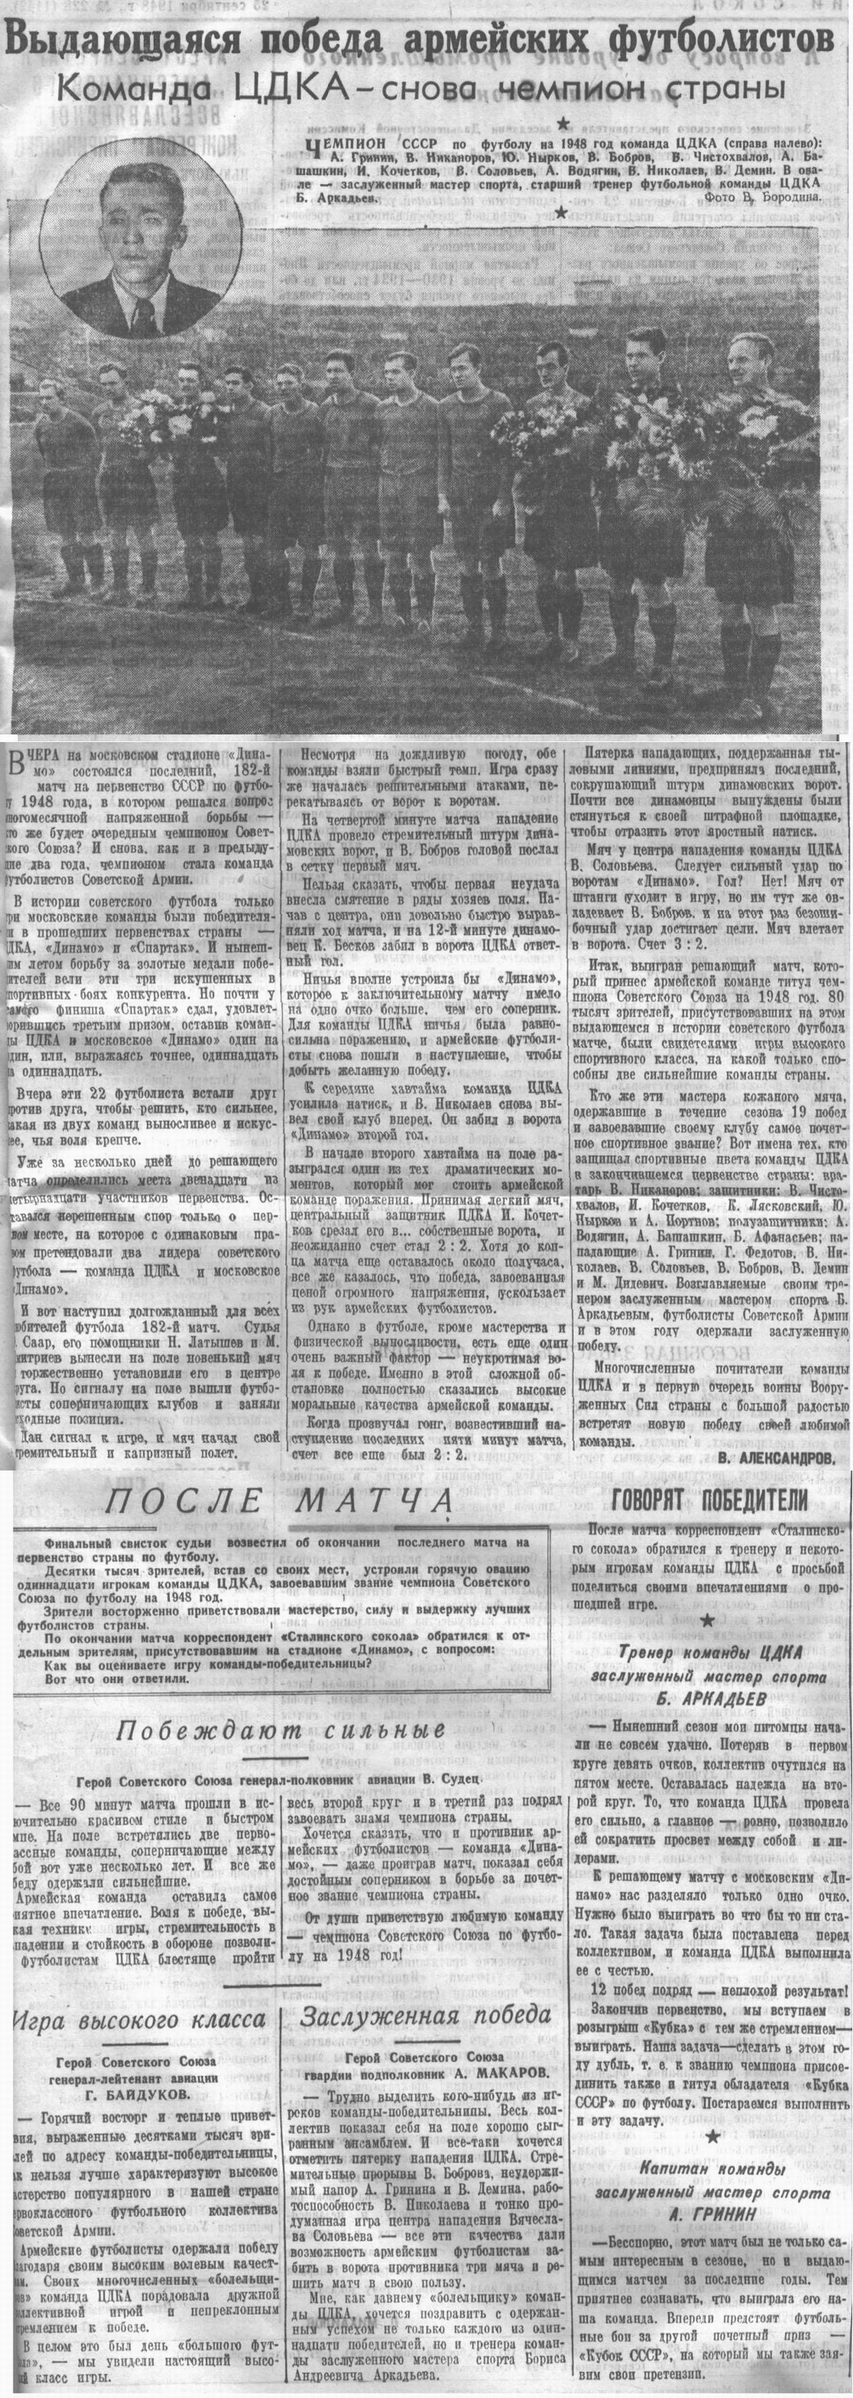 1948-09-24.CDKA-DinamoM.9